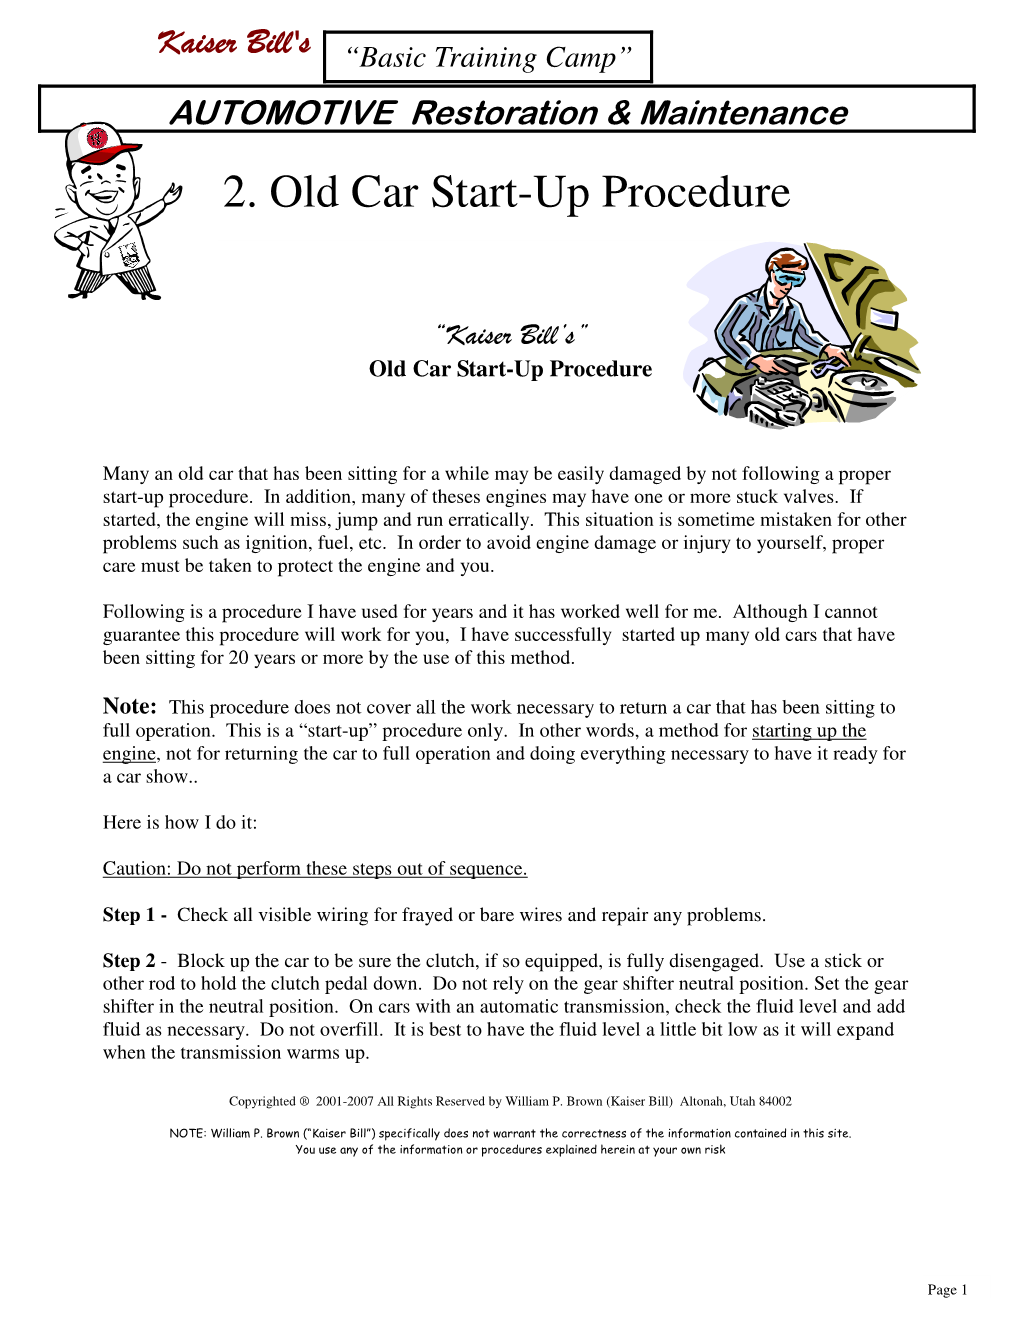 2. Old Car Start-Up Procedure